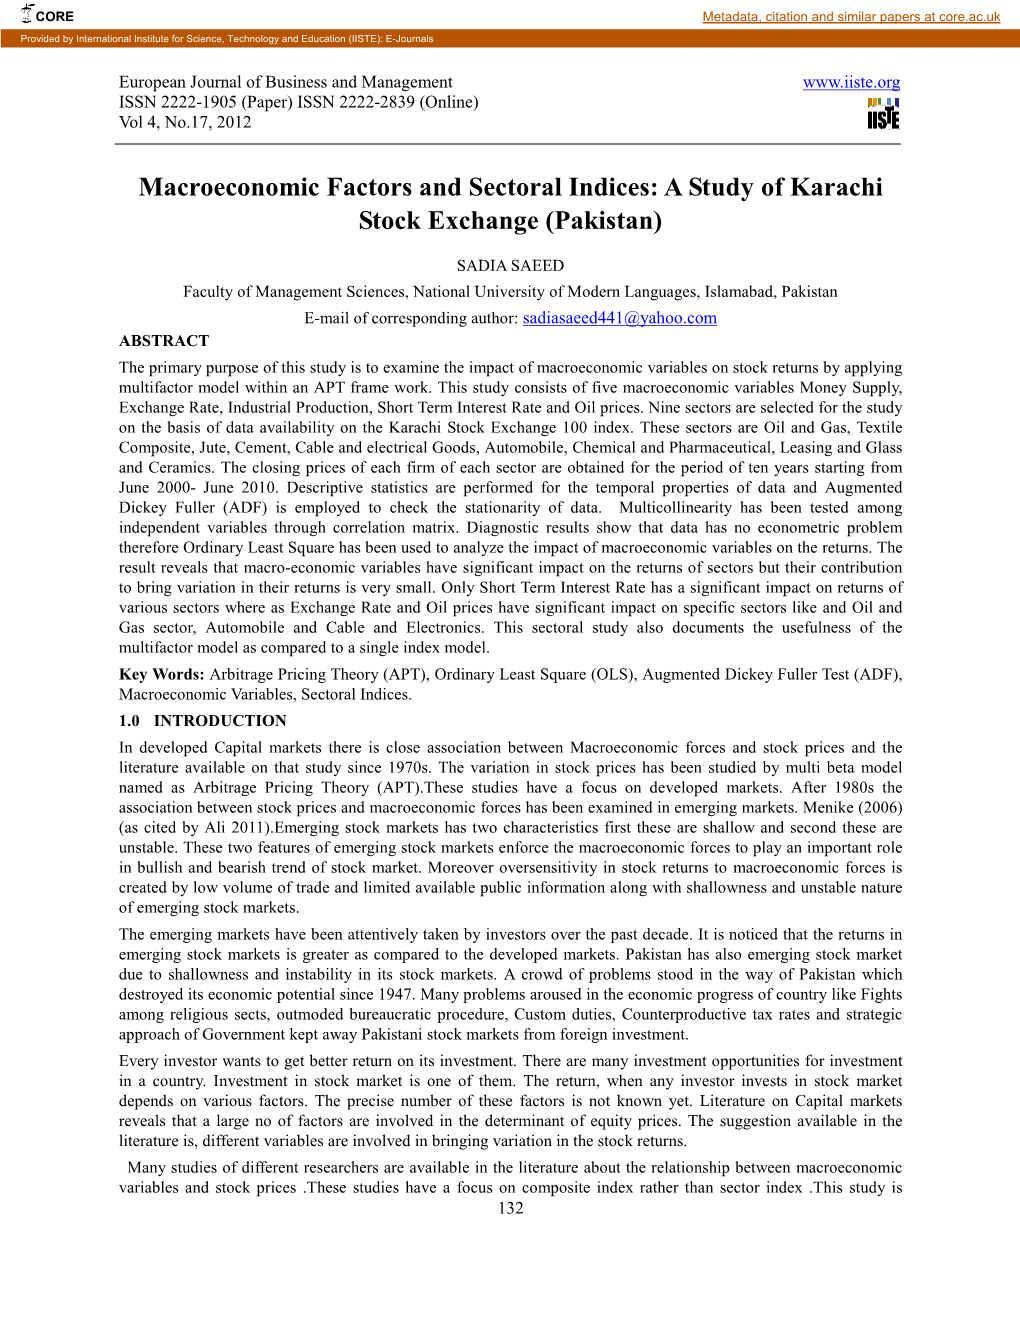 Macroeconomic Factors and Sectoral Indices: a Study of Karachi Stock Exchange (Pakistan)